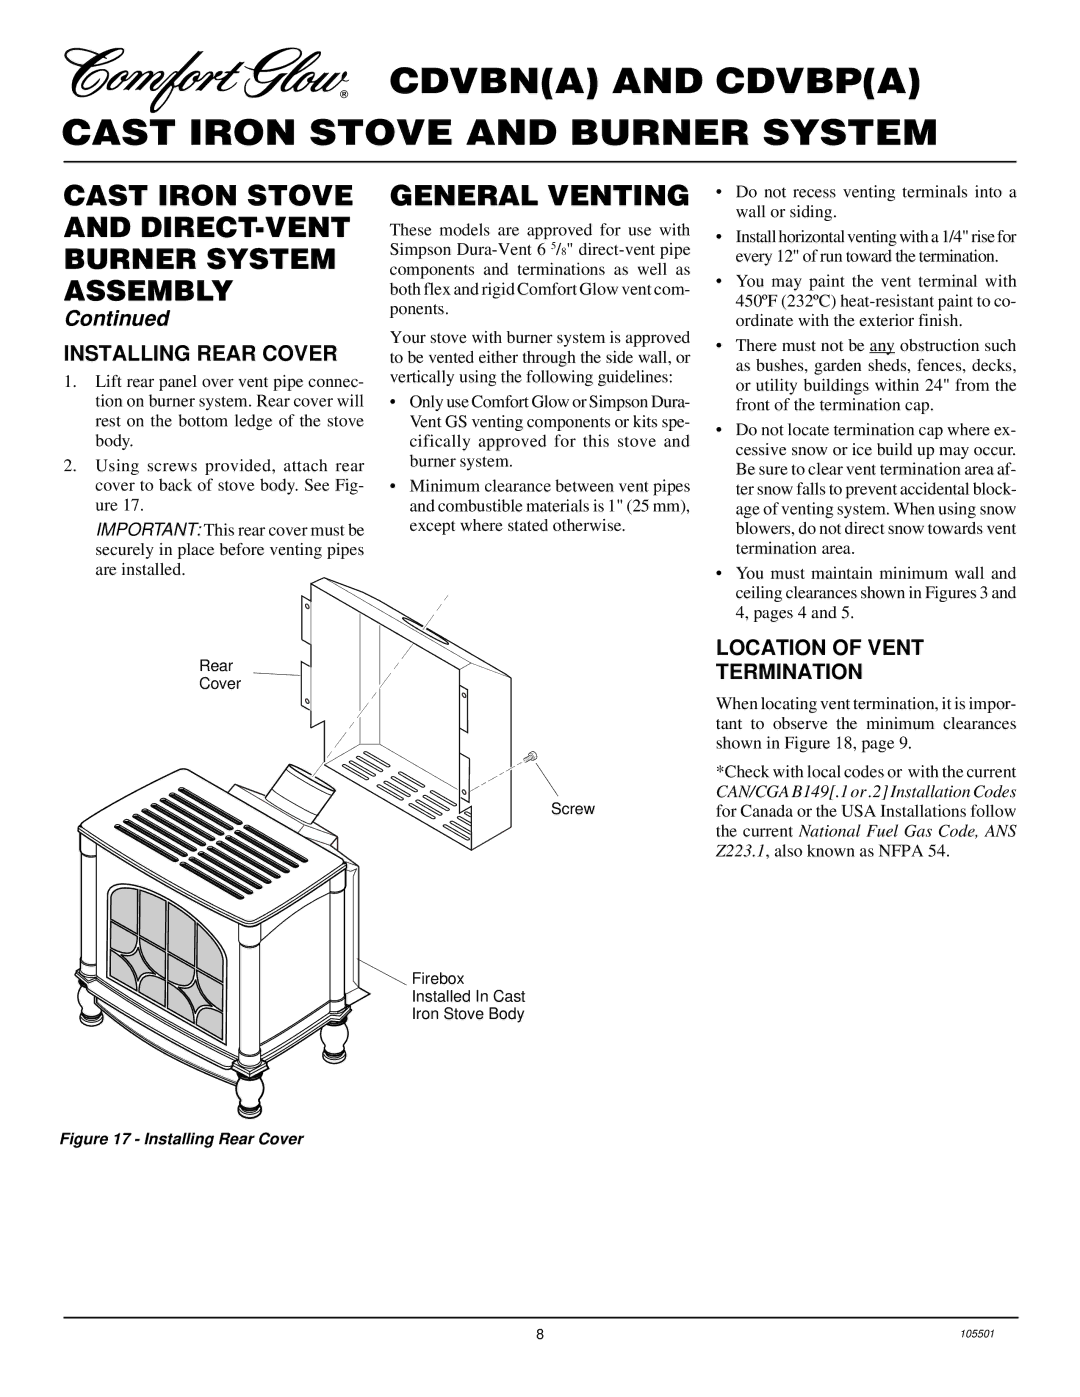 Desa CDVBN(A), CDVBP(A) installation manual General Venting, Installing Rear Cover, Location of Vent Termination, Screw 